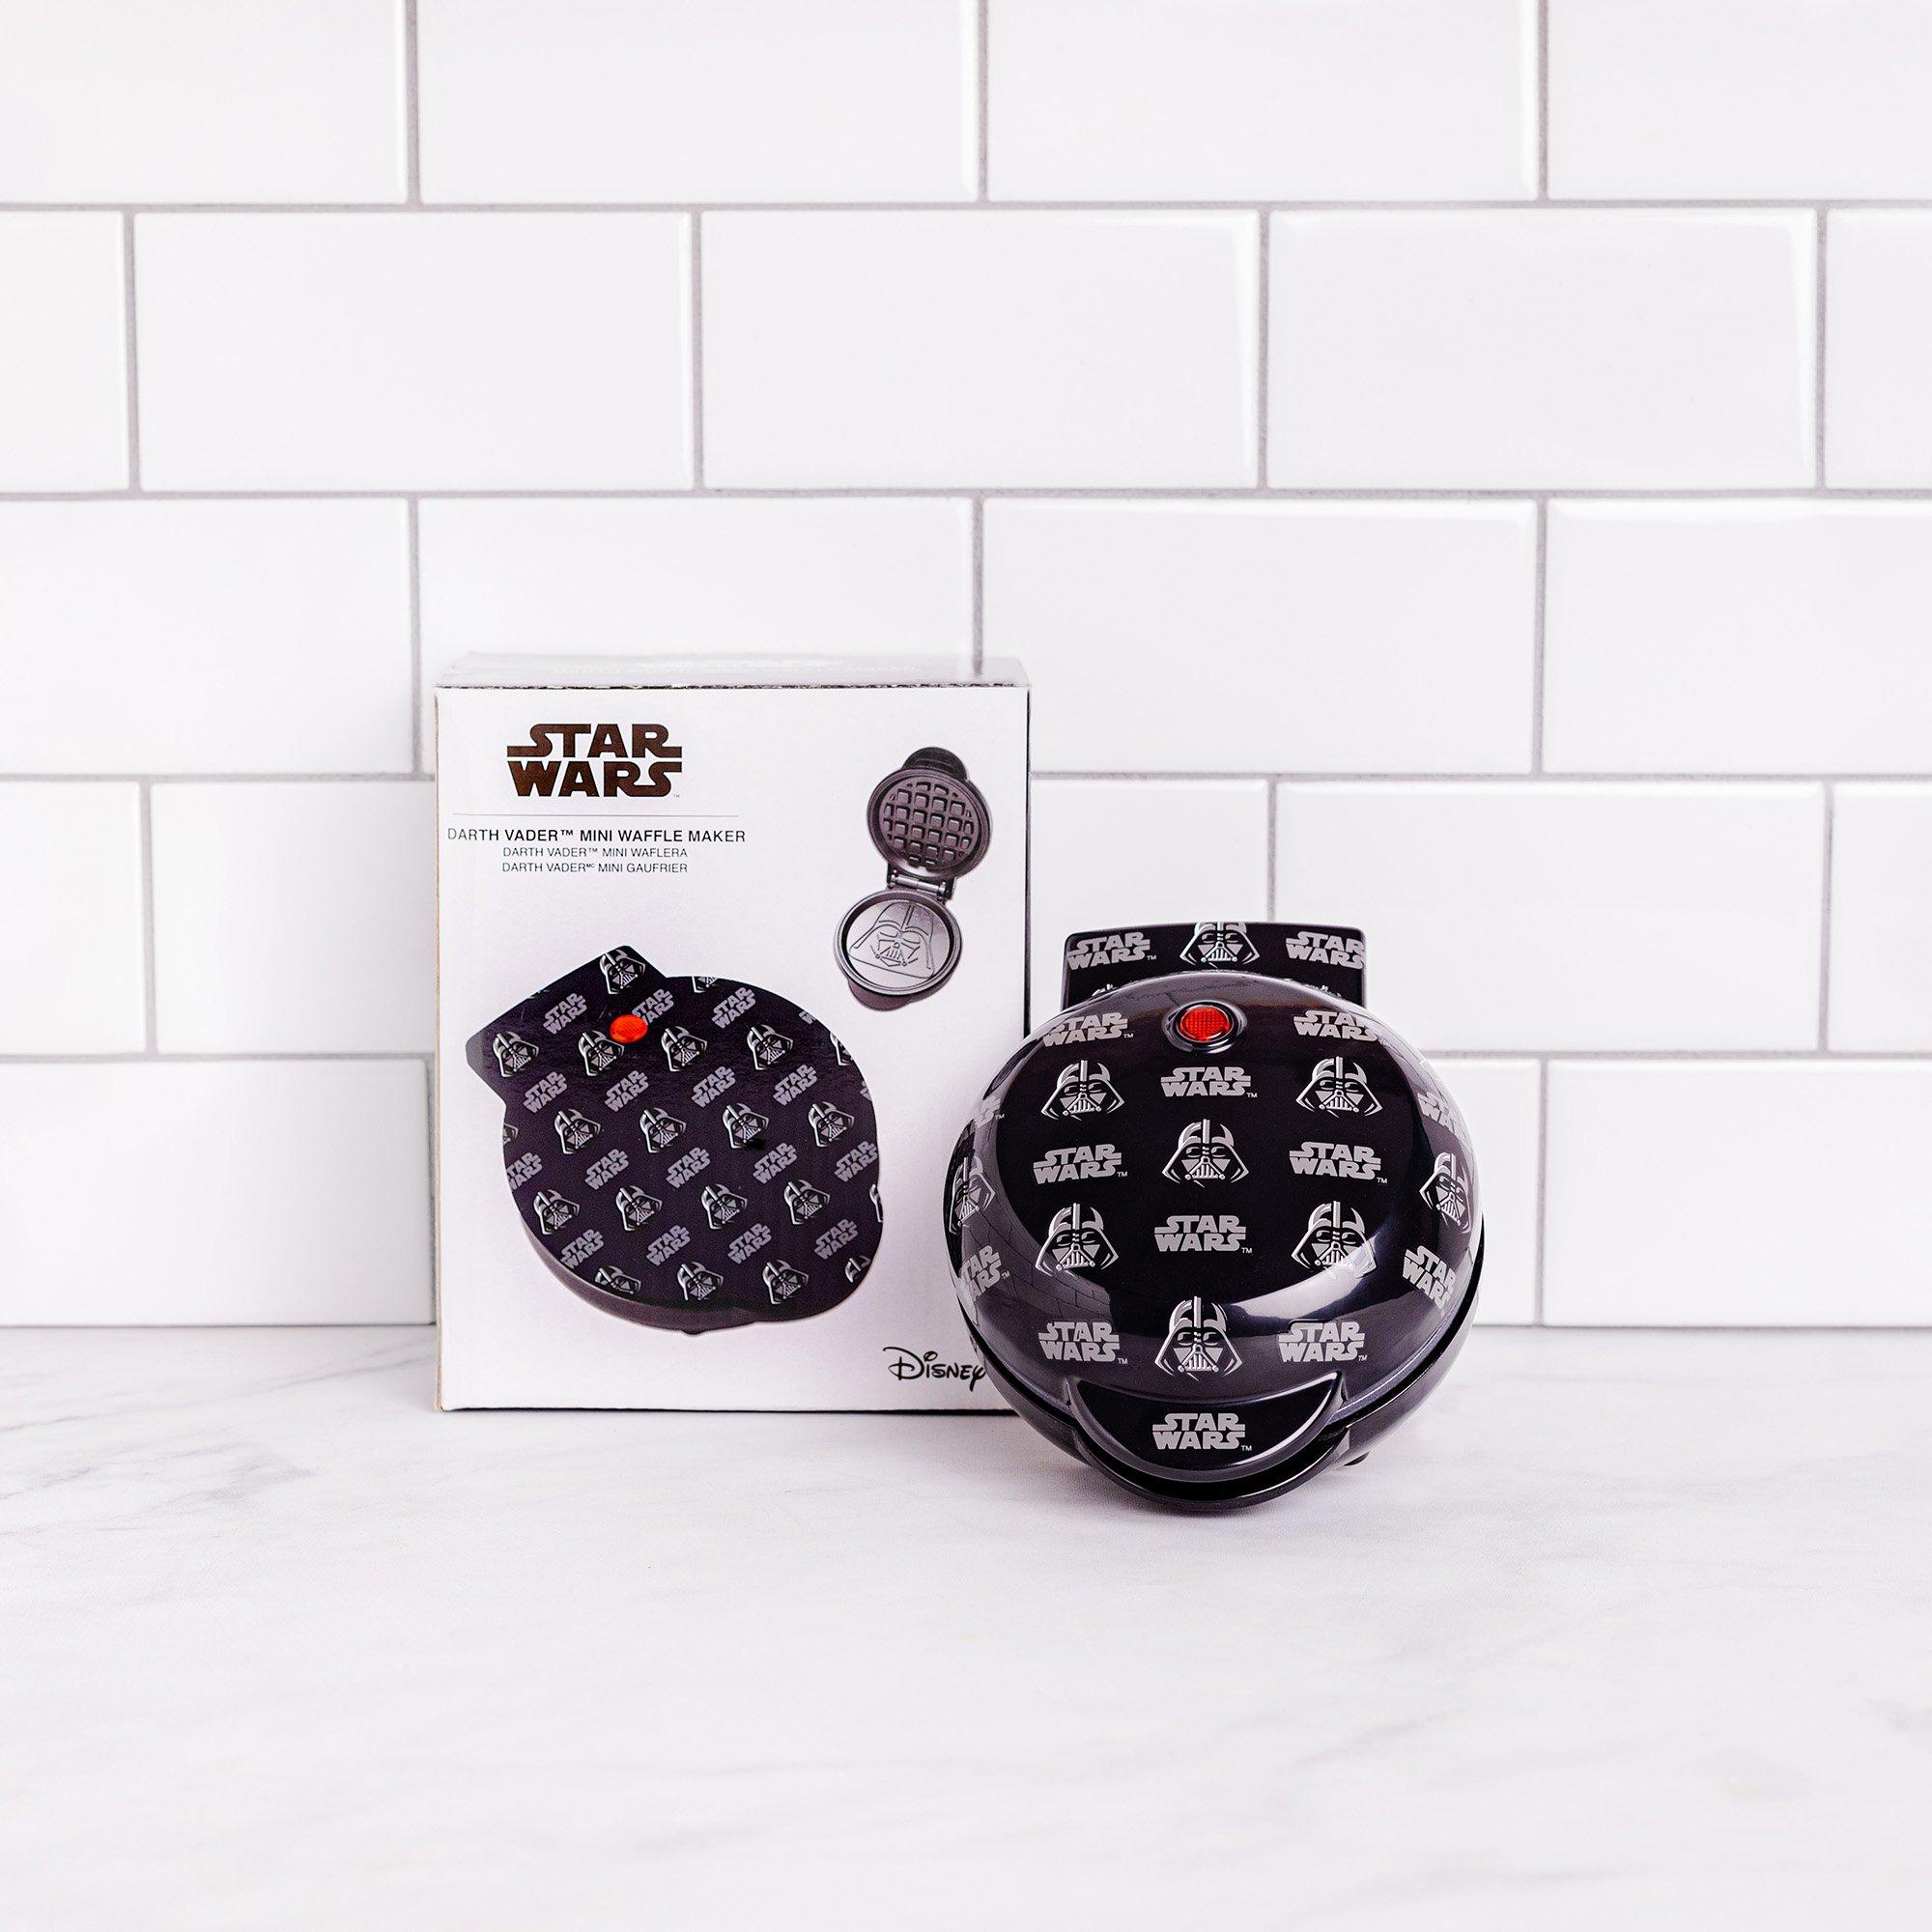 Star Wars Darth Vader and Death Star Mini Waffle Maker Set